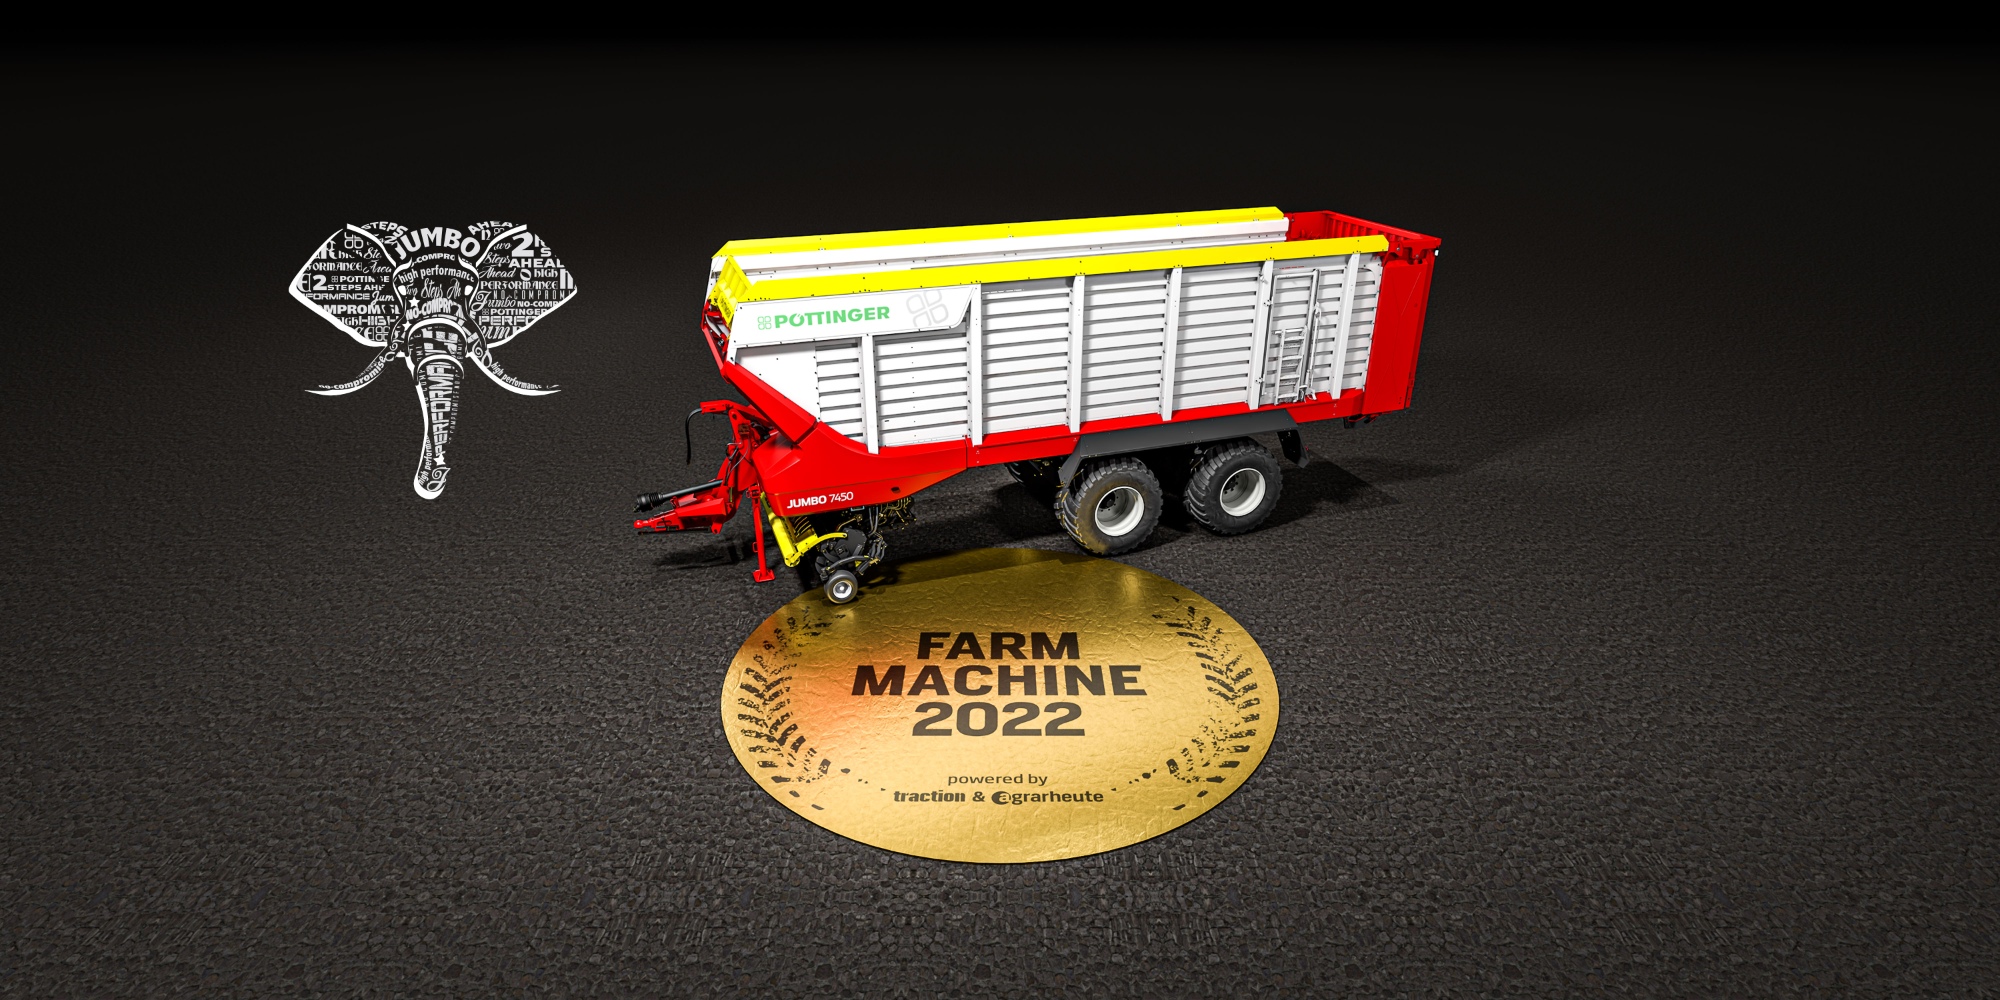 The new JUMBO is the FARM MACHINE 2022